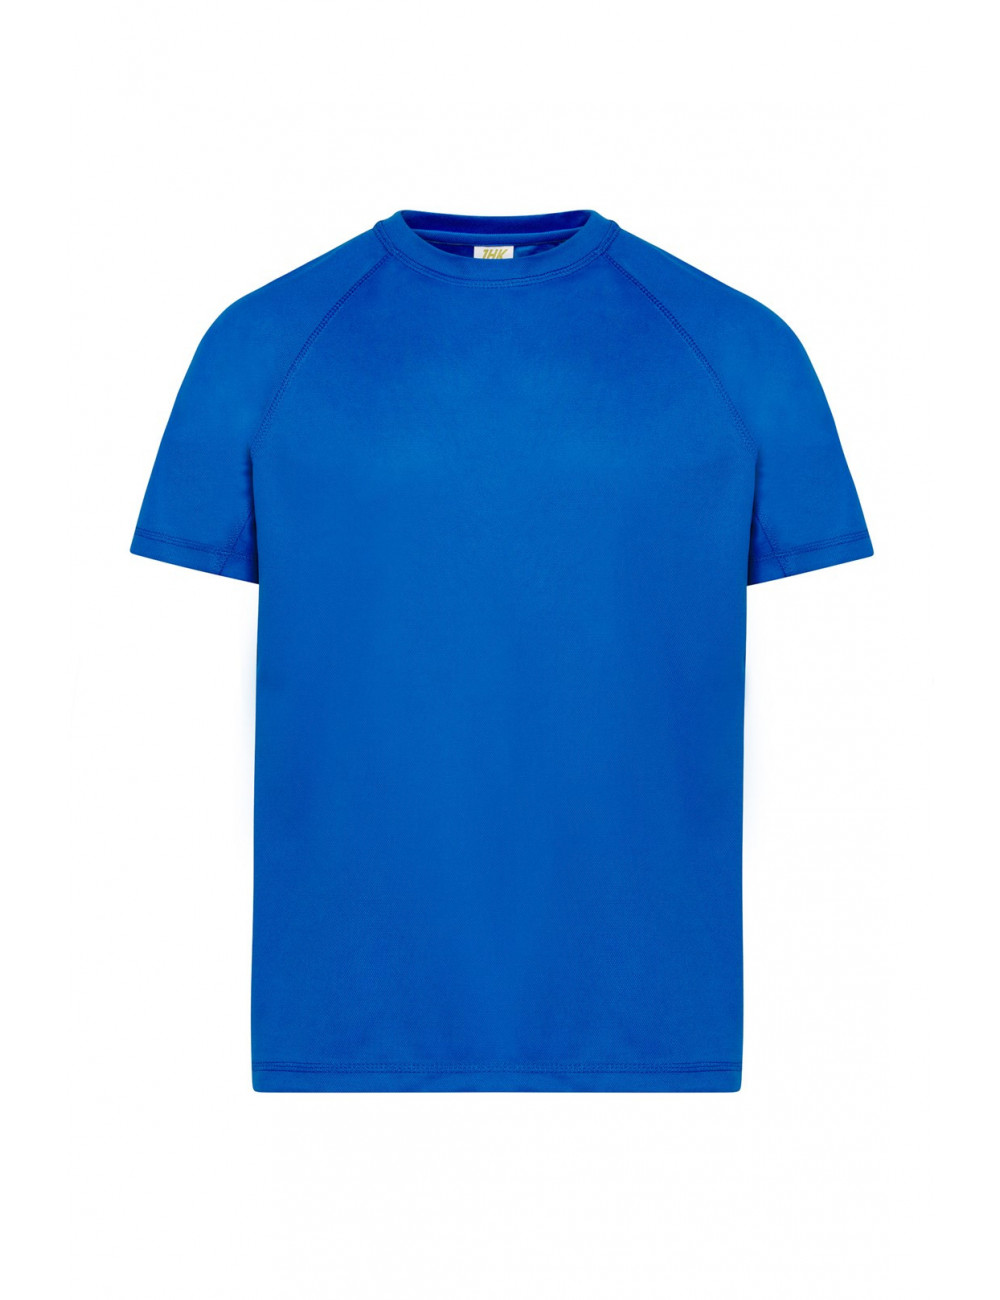 Herren T-Shirt Sport Mann Königsblau JHK